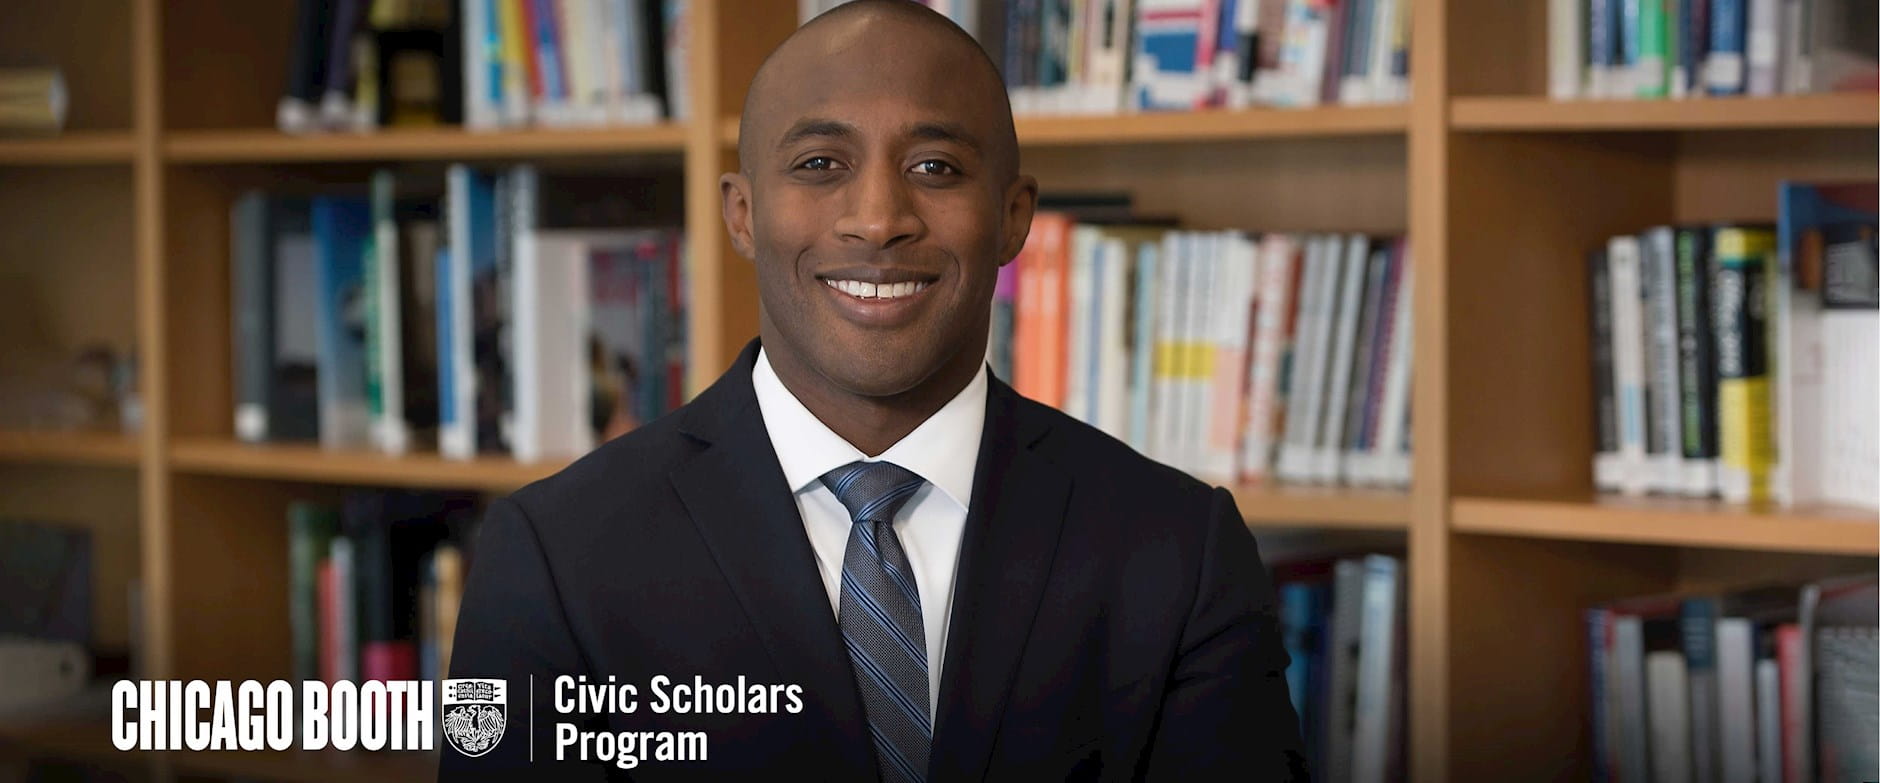 This image shows Chicago Booth Neubauer Civic Scholar Jason Quiara, an education nonprofit leader